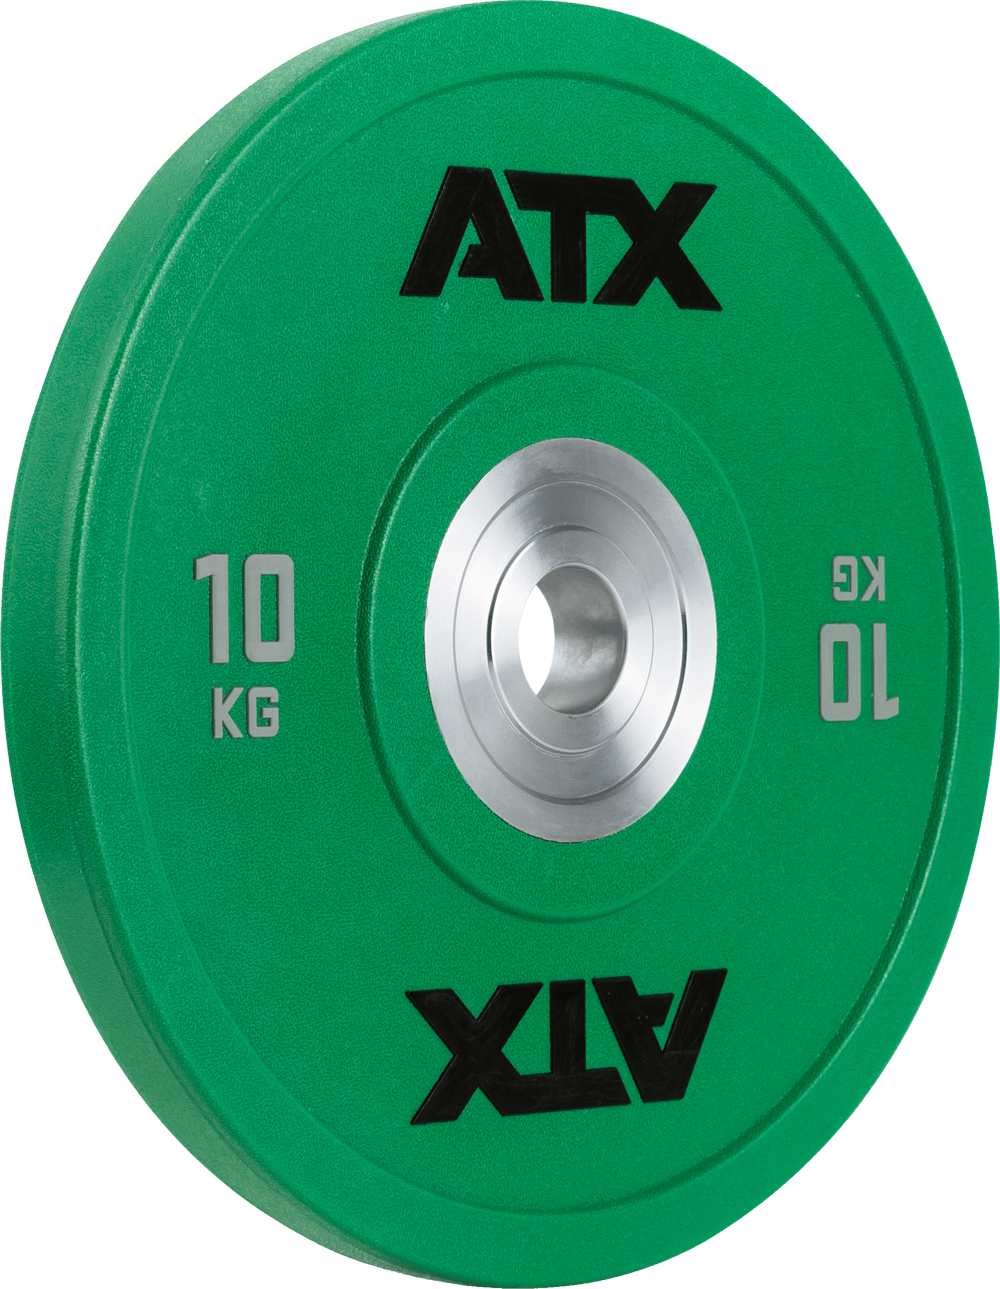 50-ATX-PUBP-1000